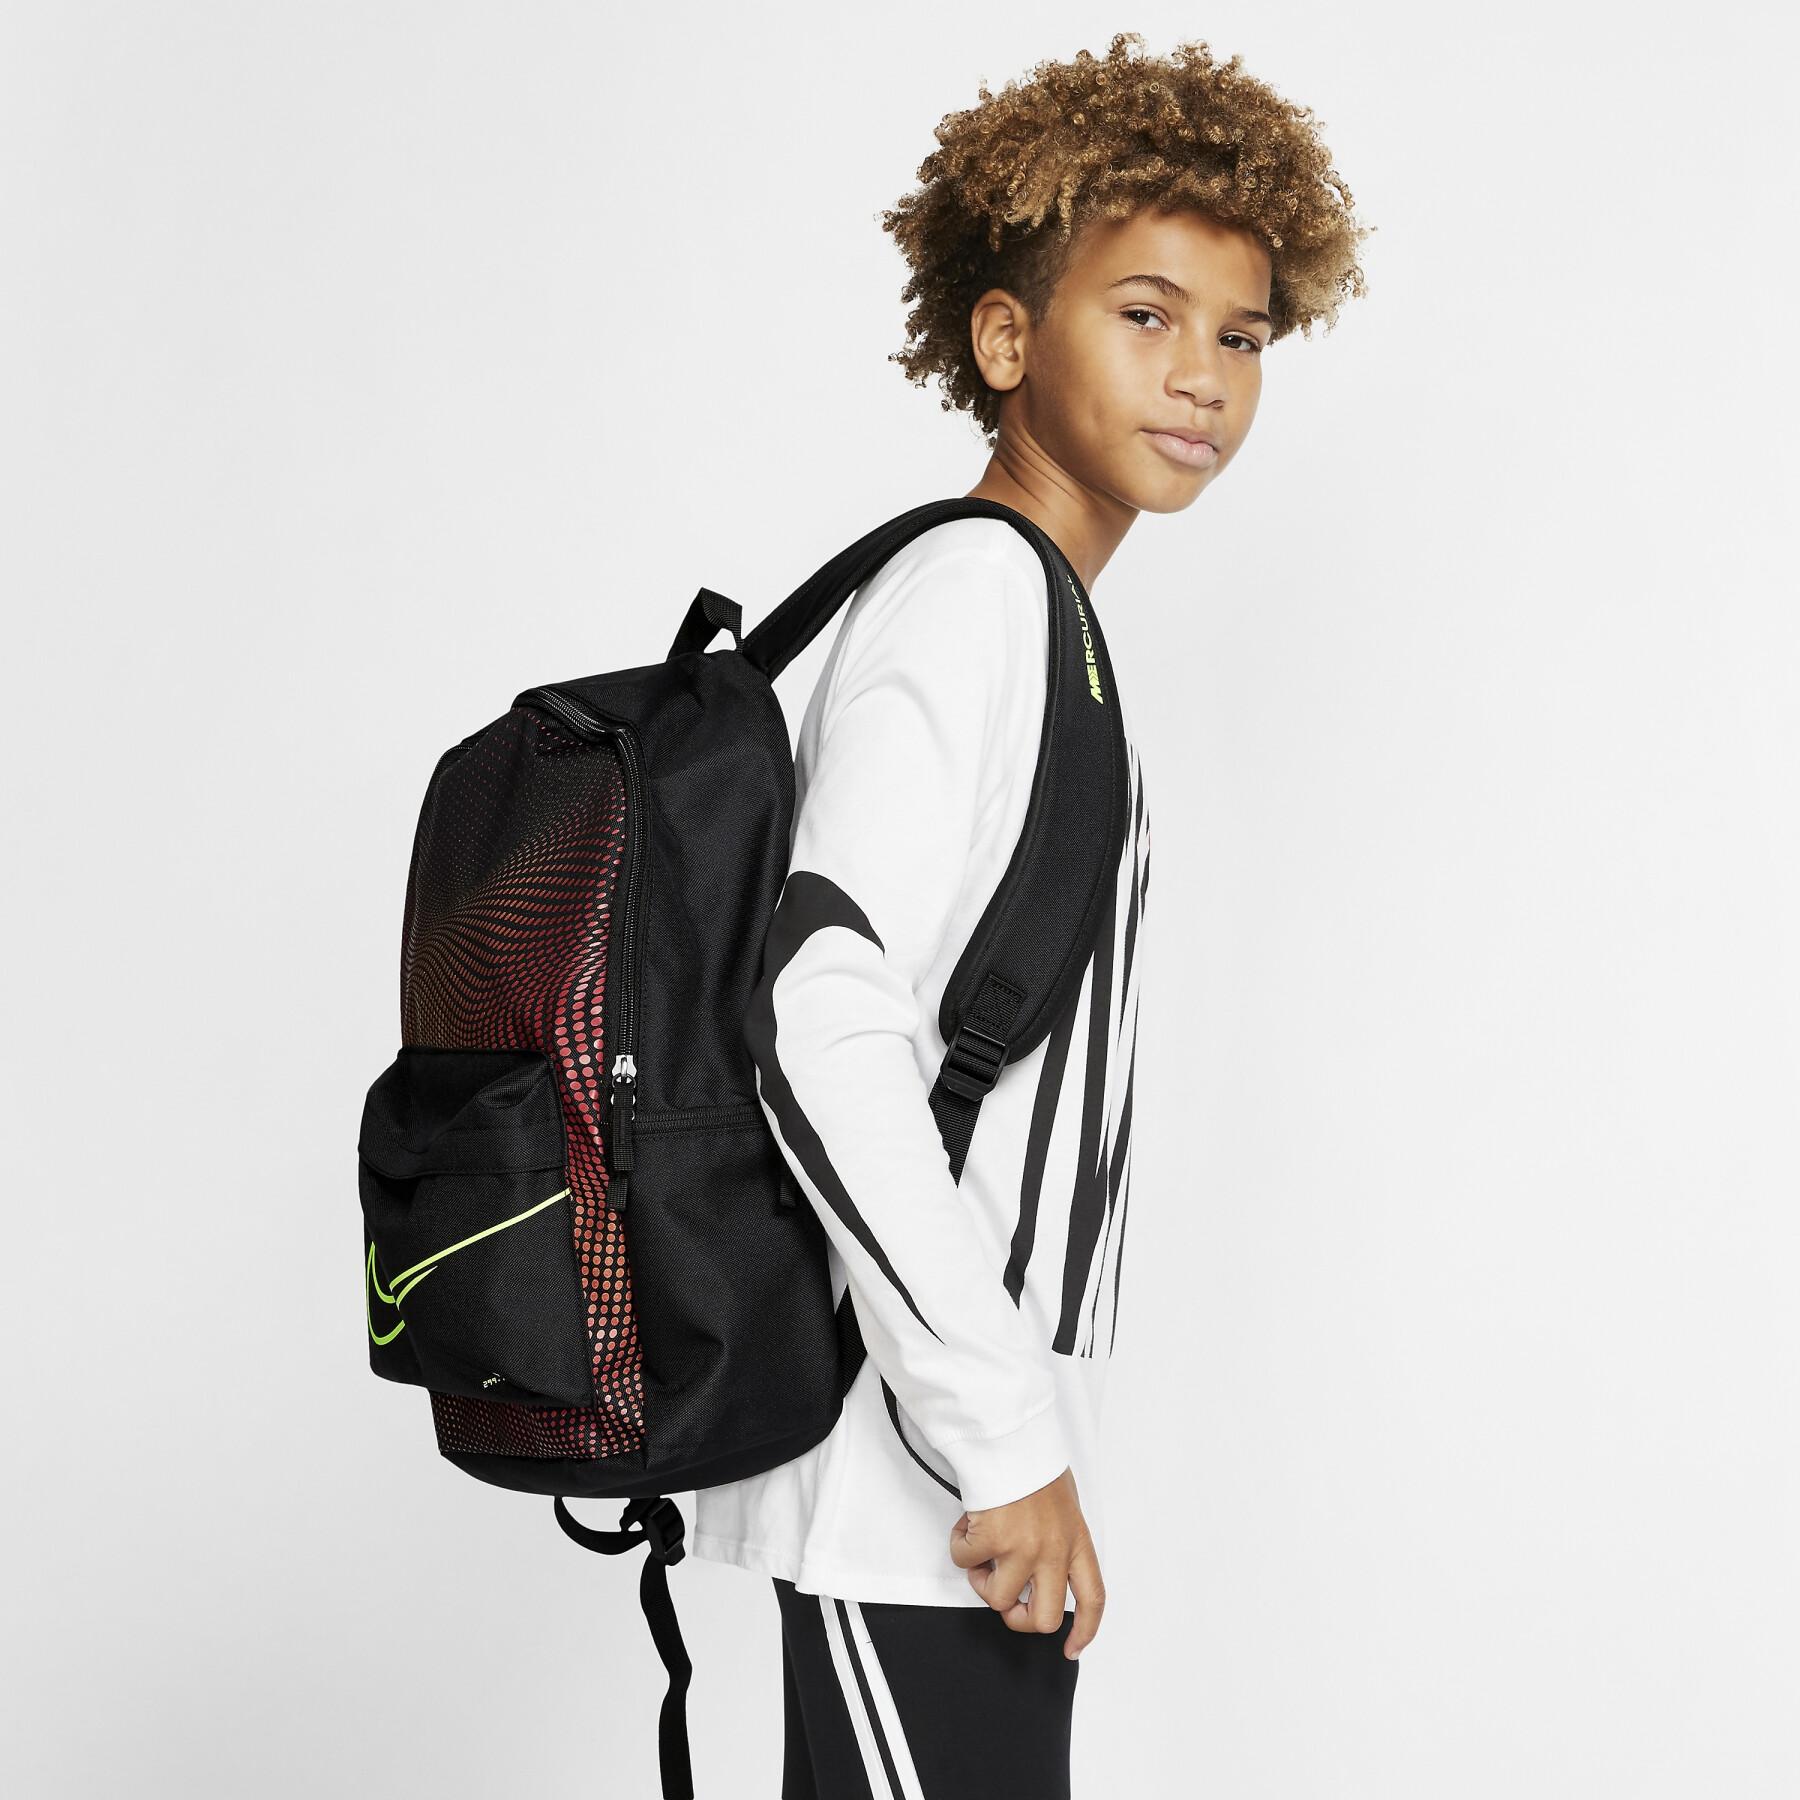 Children's backpack Nike Mercurial Series